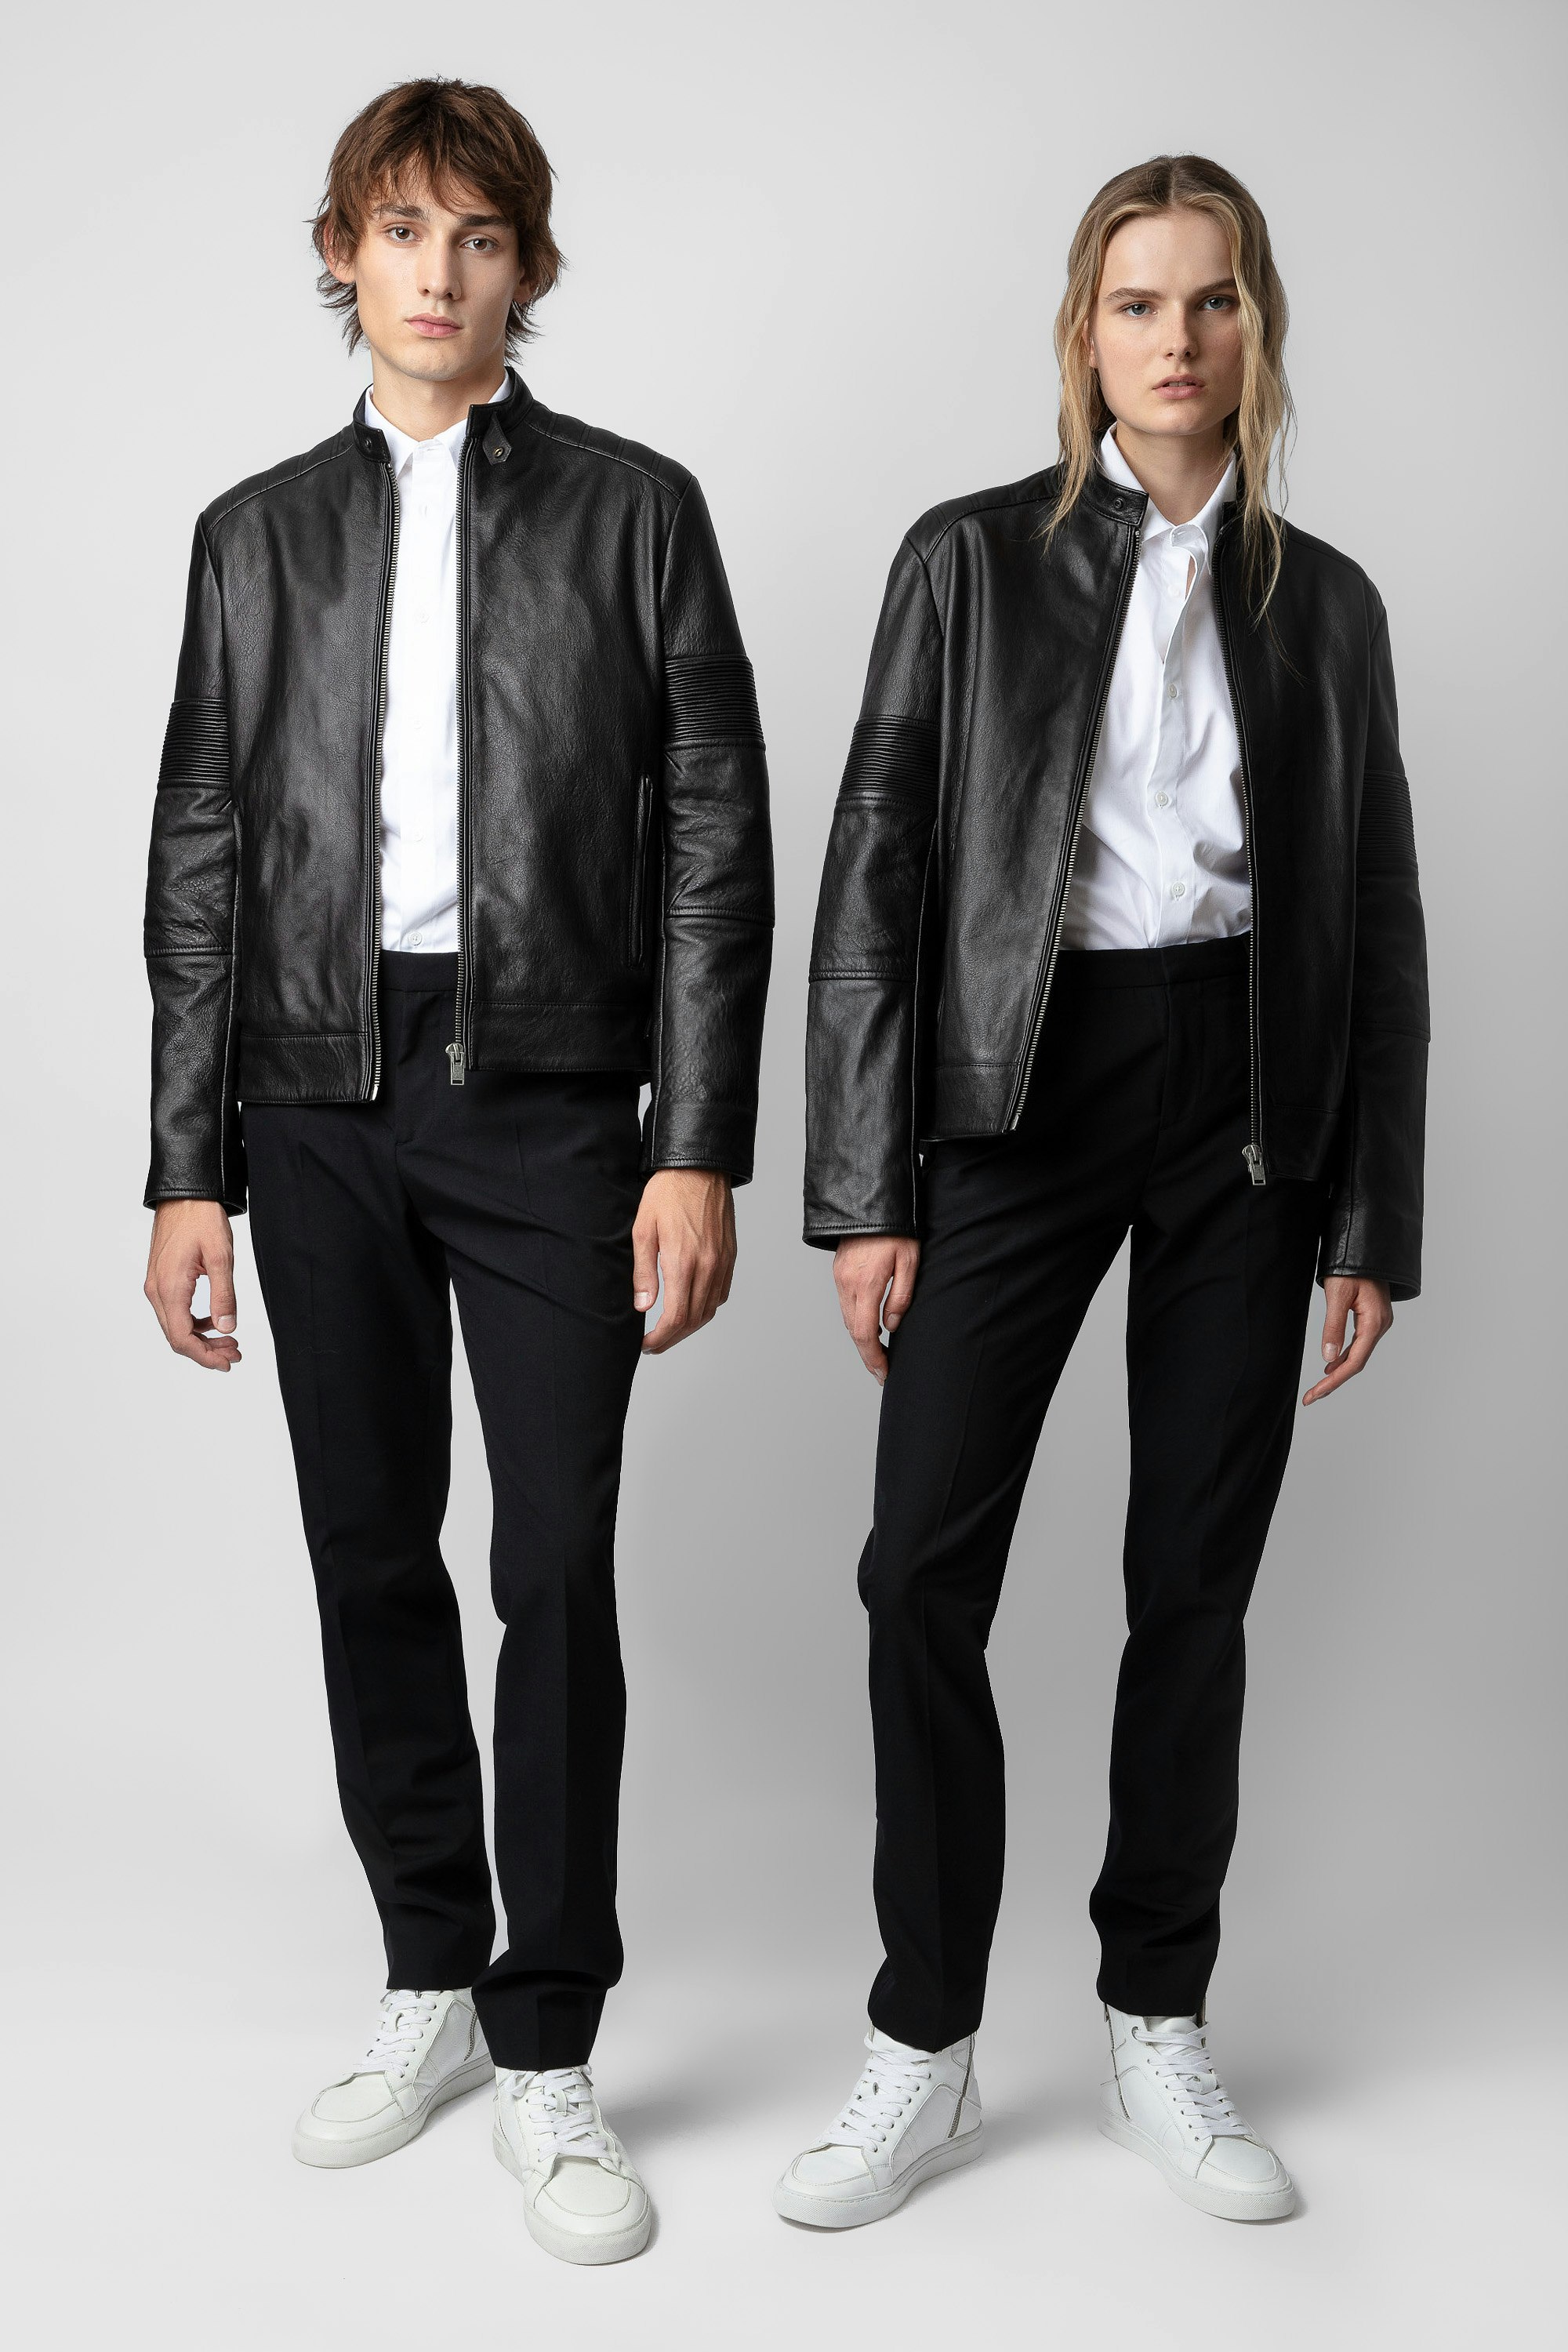 Lean Leather Jacket - Unisex anthracite leather biker jacket.